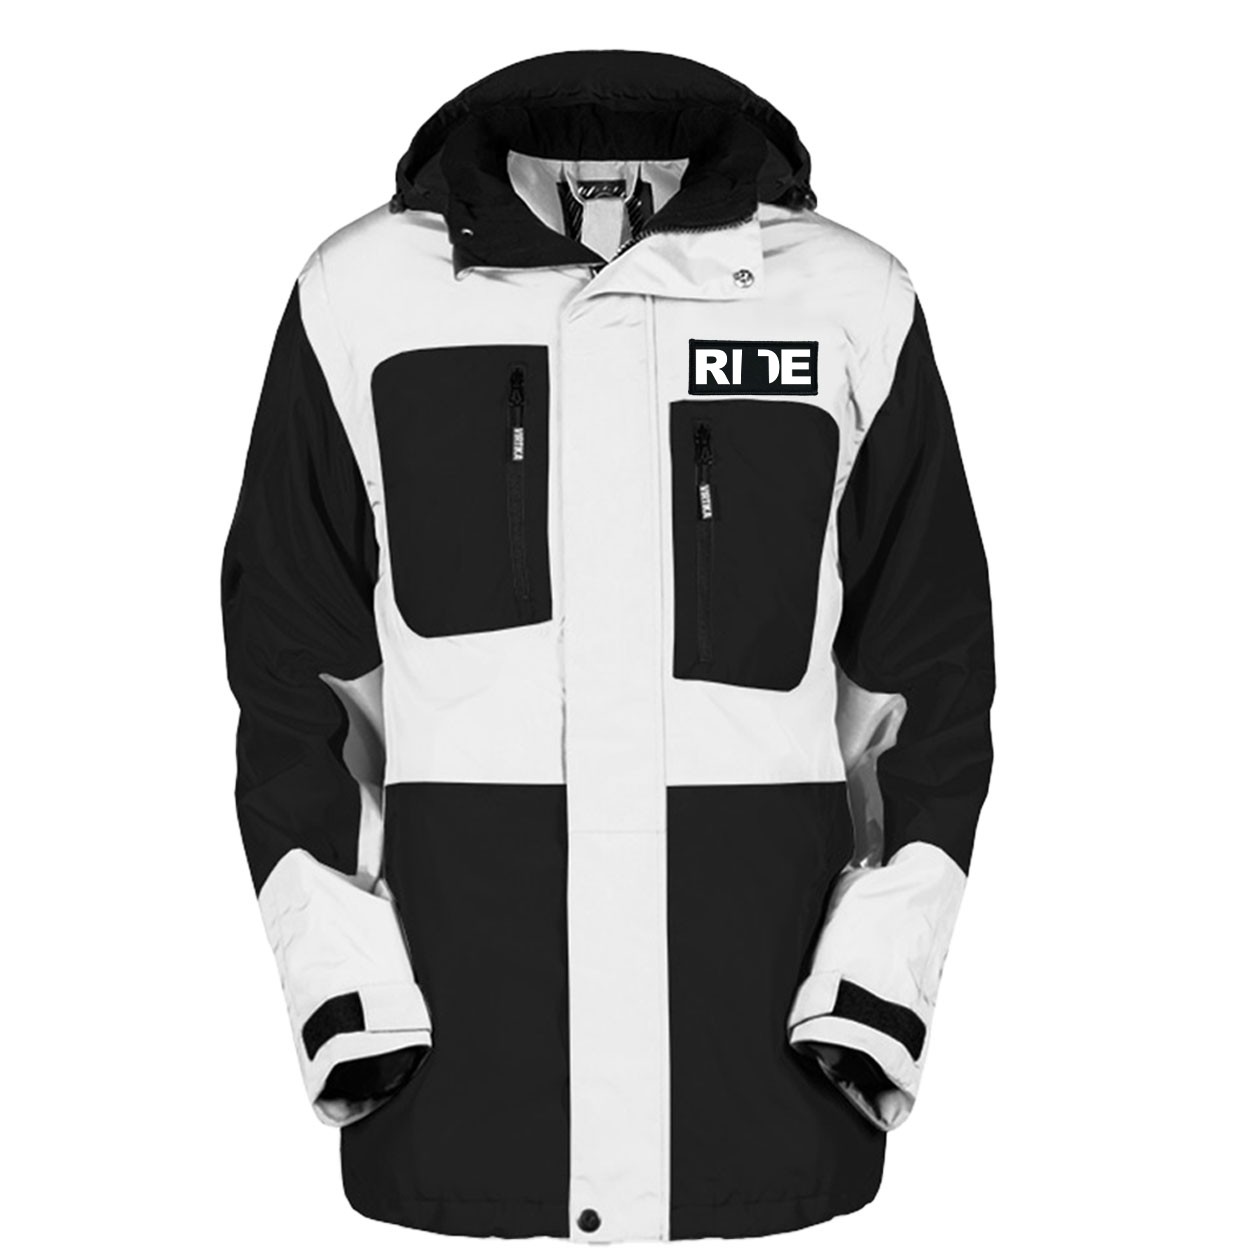 Ride Utah Pro Waterproof Breathable Winter Virtika Jacket Black/White (White Logo)